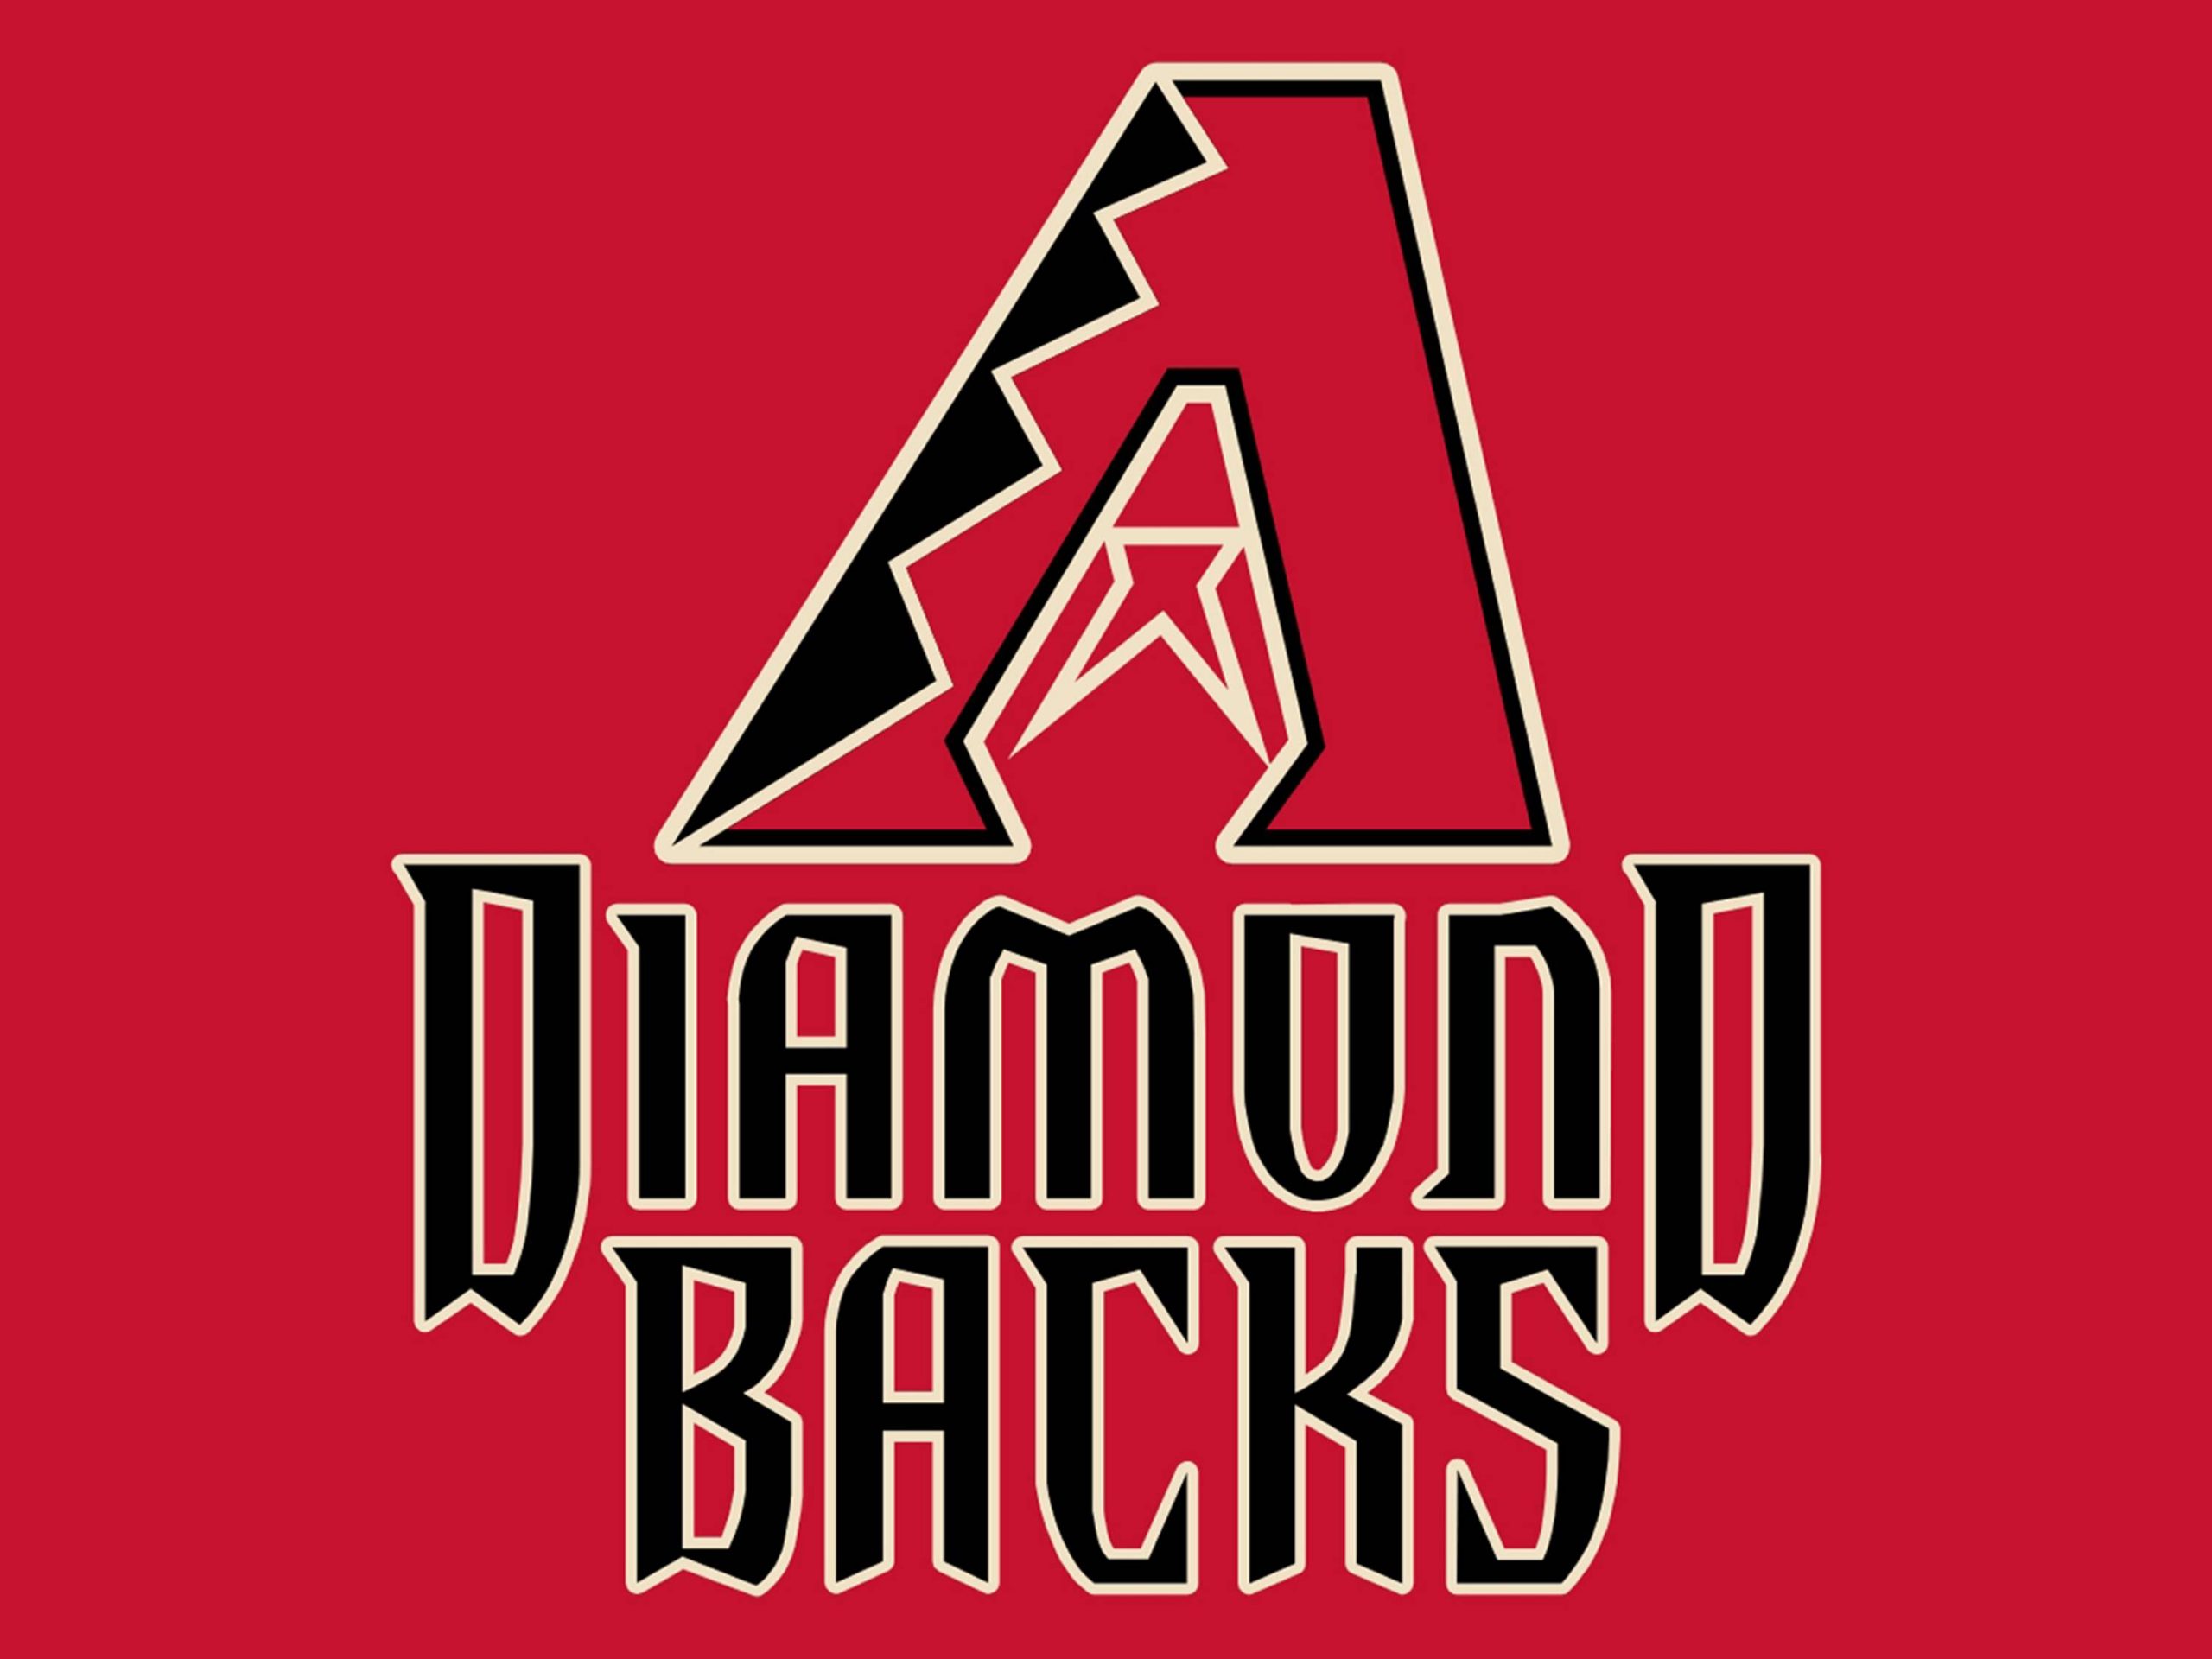 Complete Arizona Diamondbacks MLB schedule for the 2021 season